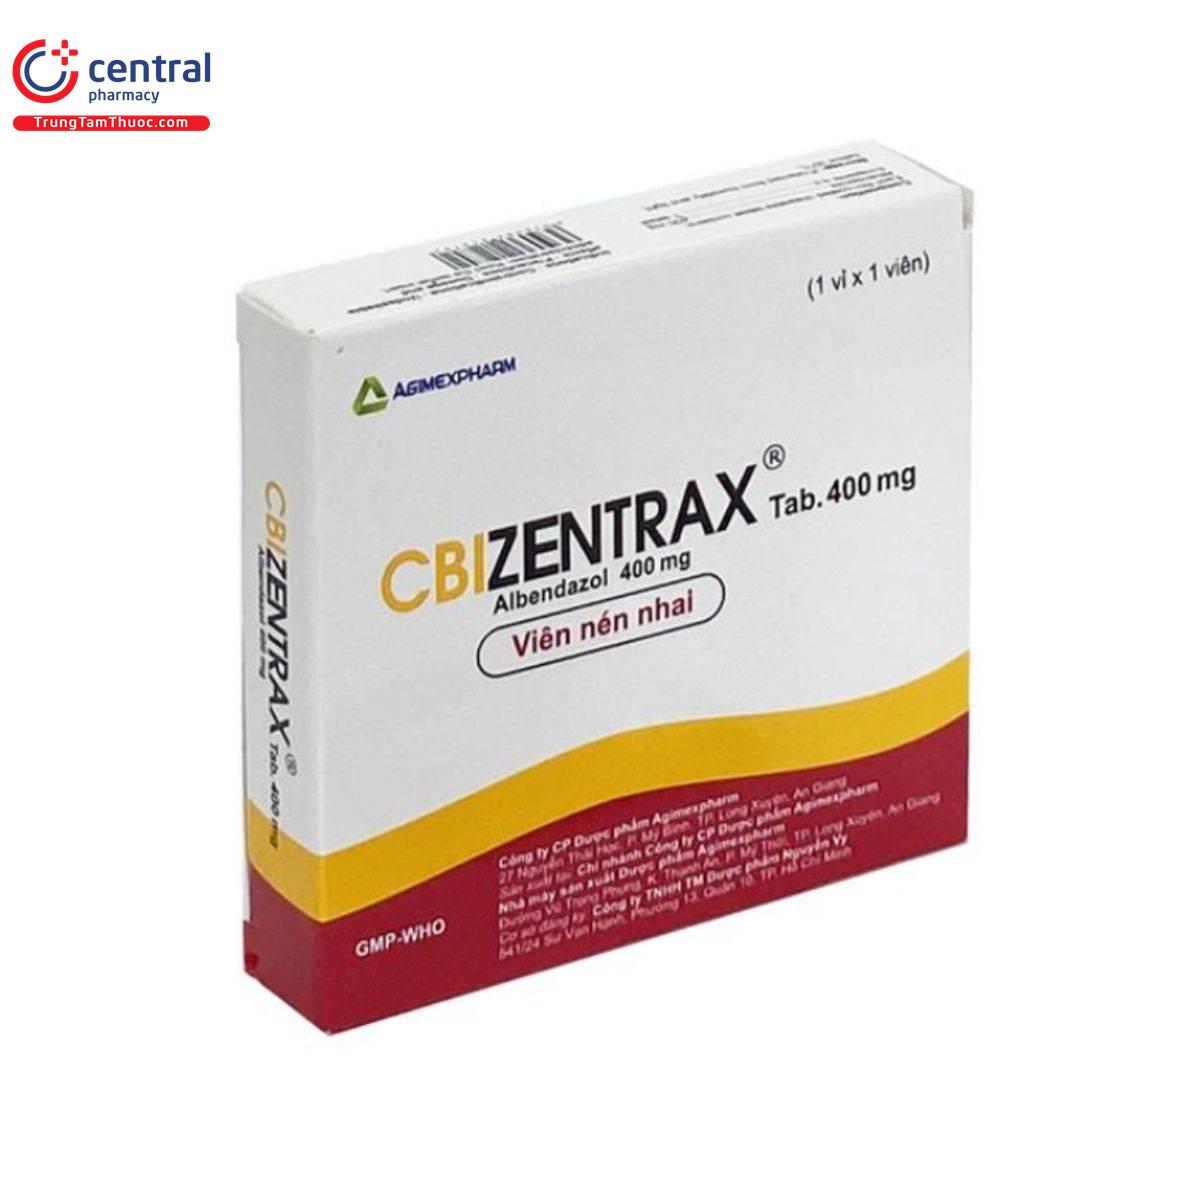 cbizentrax 2 P6482